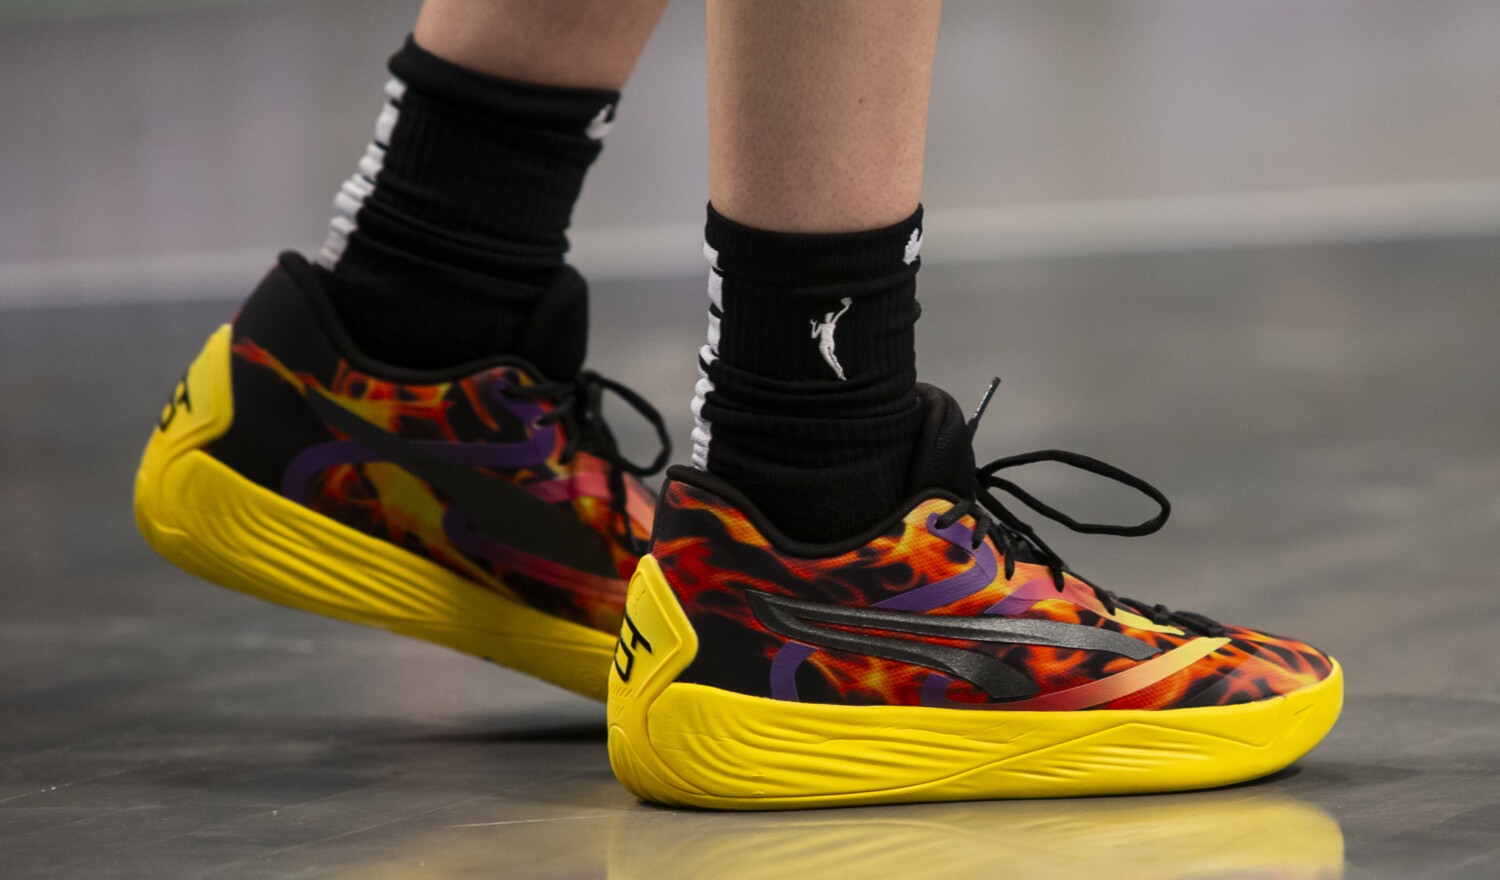 Suns commission designer to make custom Jordan 4s to match teal